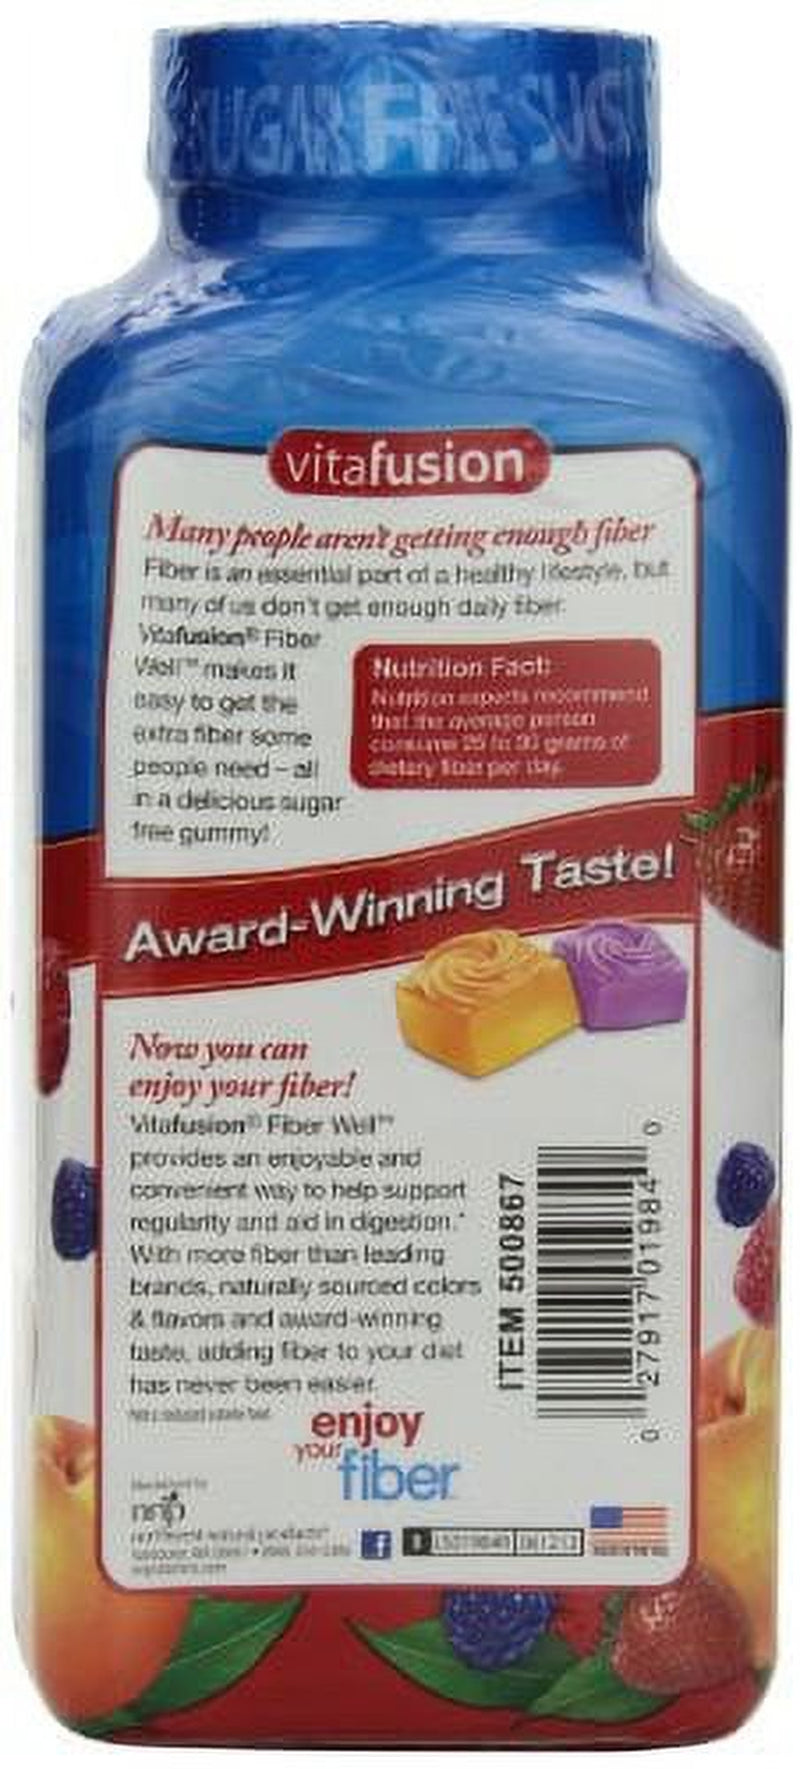 Vitafusion Fiber Gummies, 220 Count "Sugar Free"